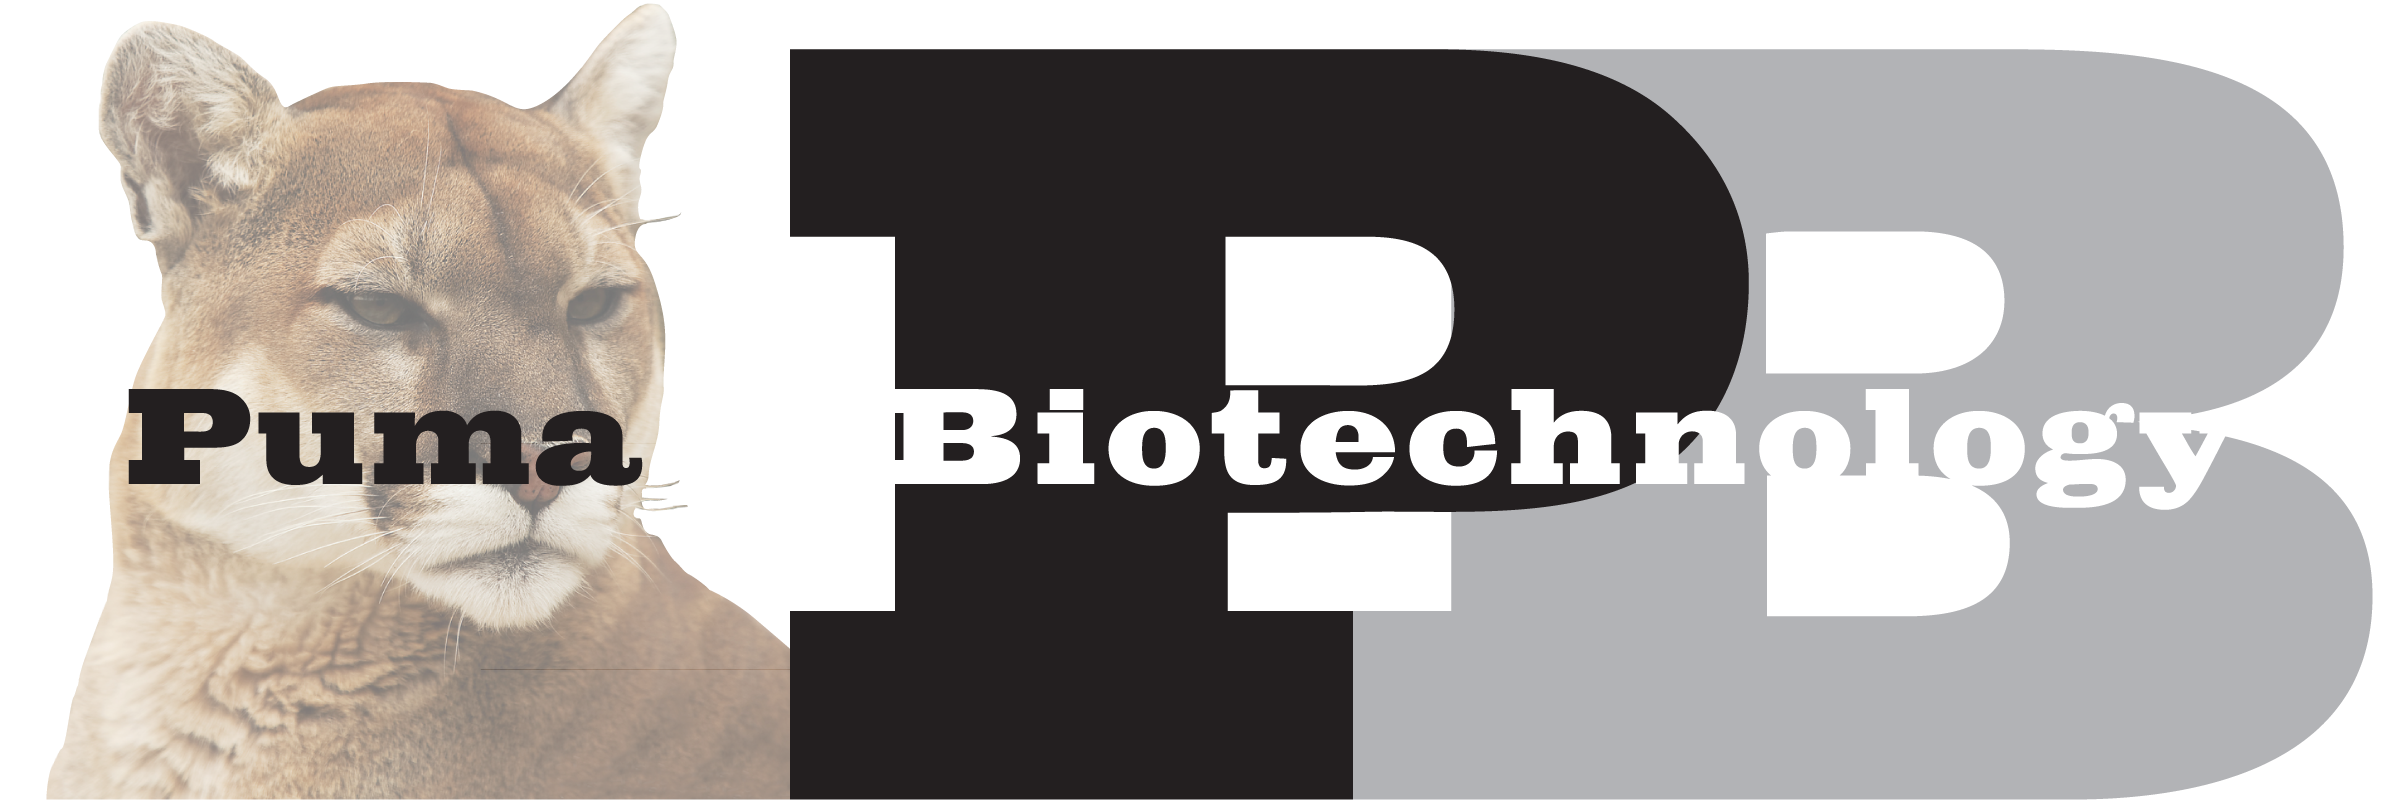 Puma biotechnology logo